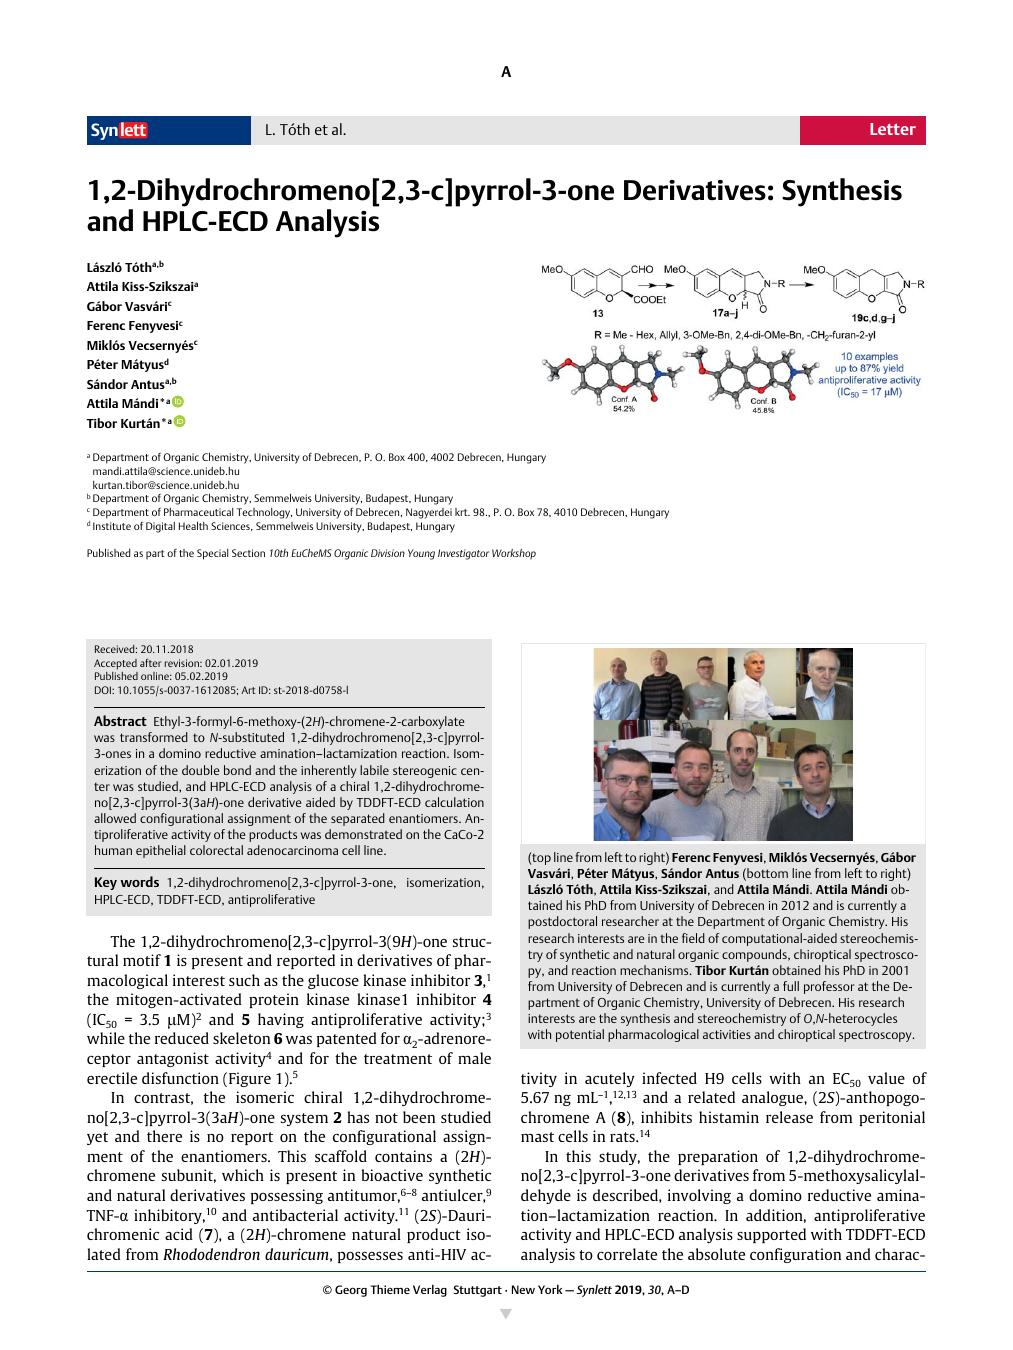 1 2 Dihydrochromeno 2 3 C Pyrrol 3 One Derivatives Synthesis And Hplc Ecd Analysis Synlett X Mol